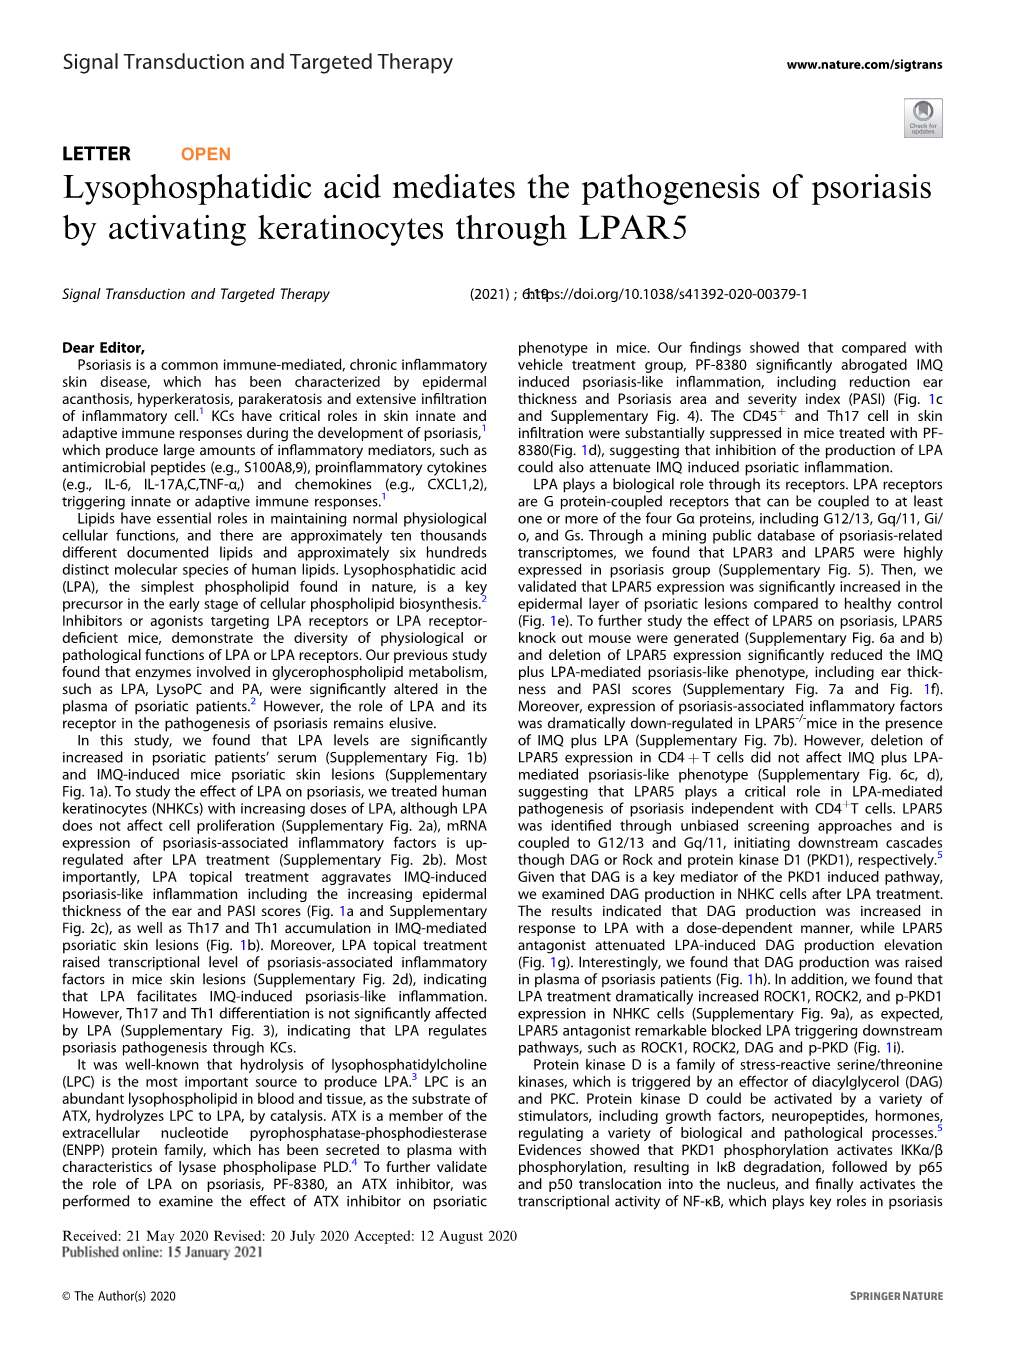 Lysophosphatidic Acid Mediates the Pathogenesis of Psoriasis by Activating Keratinocytes Through LPAR5